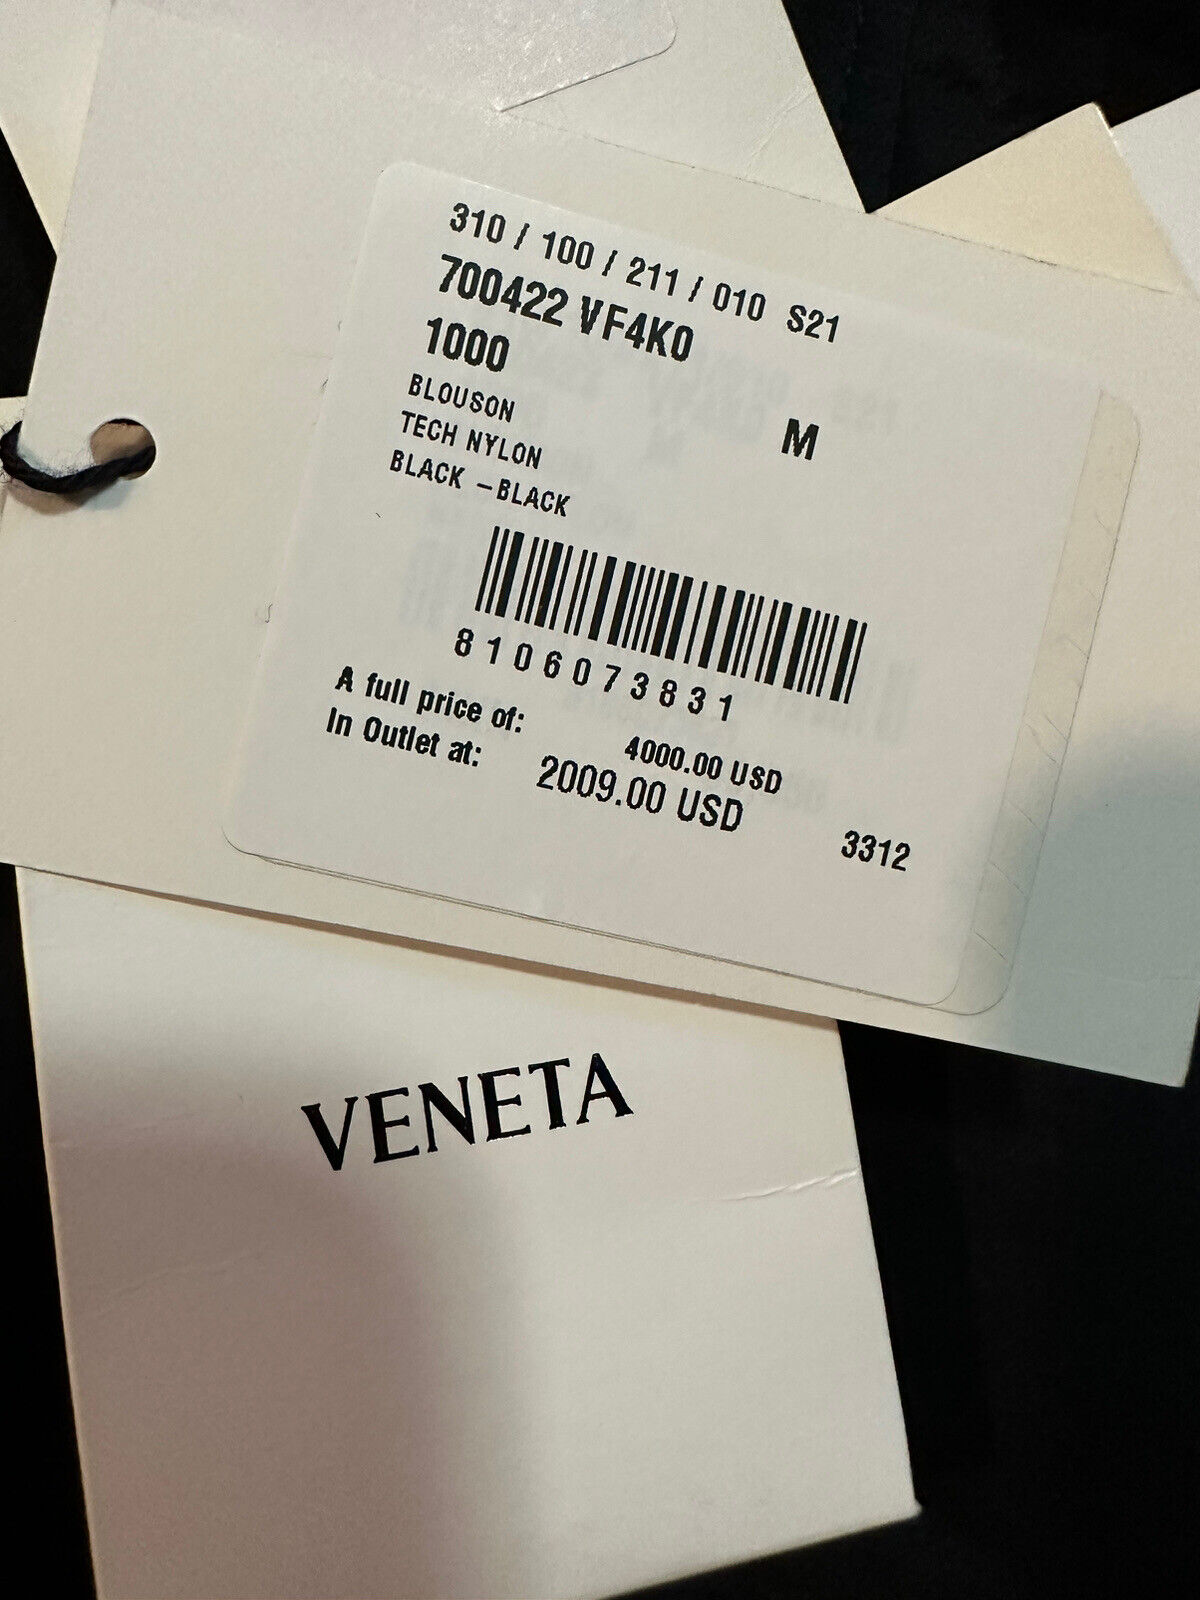 New $4000 Bottega Veneta Men Oversized Jacket Coat Color Black Size M Italy